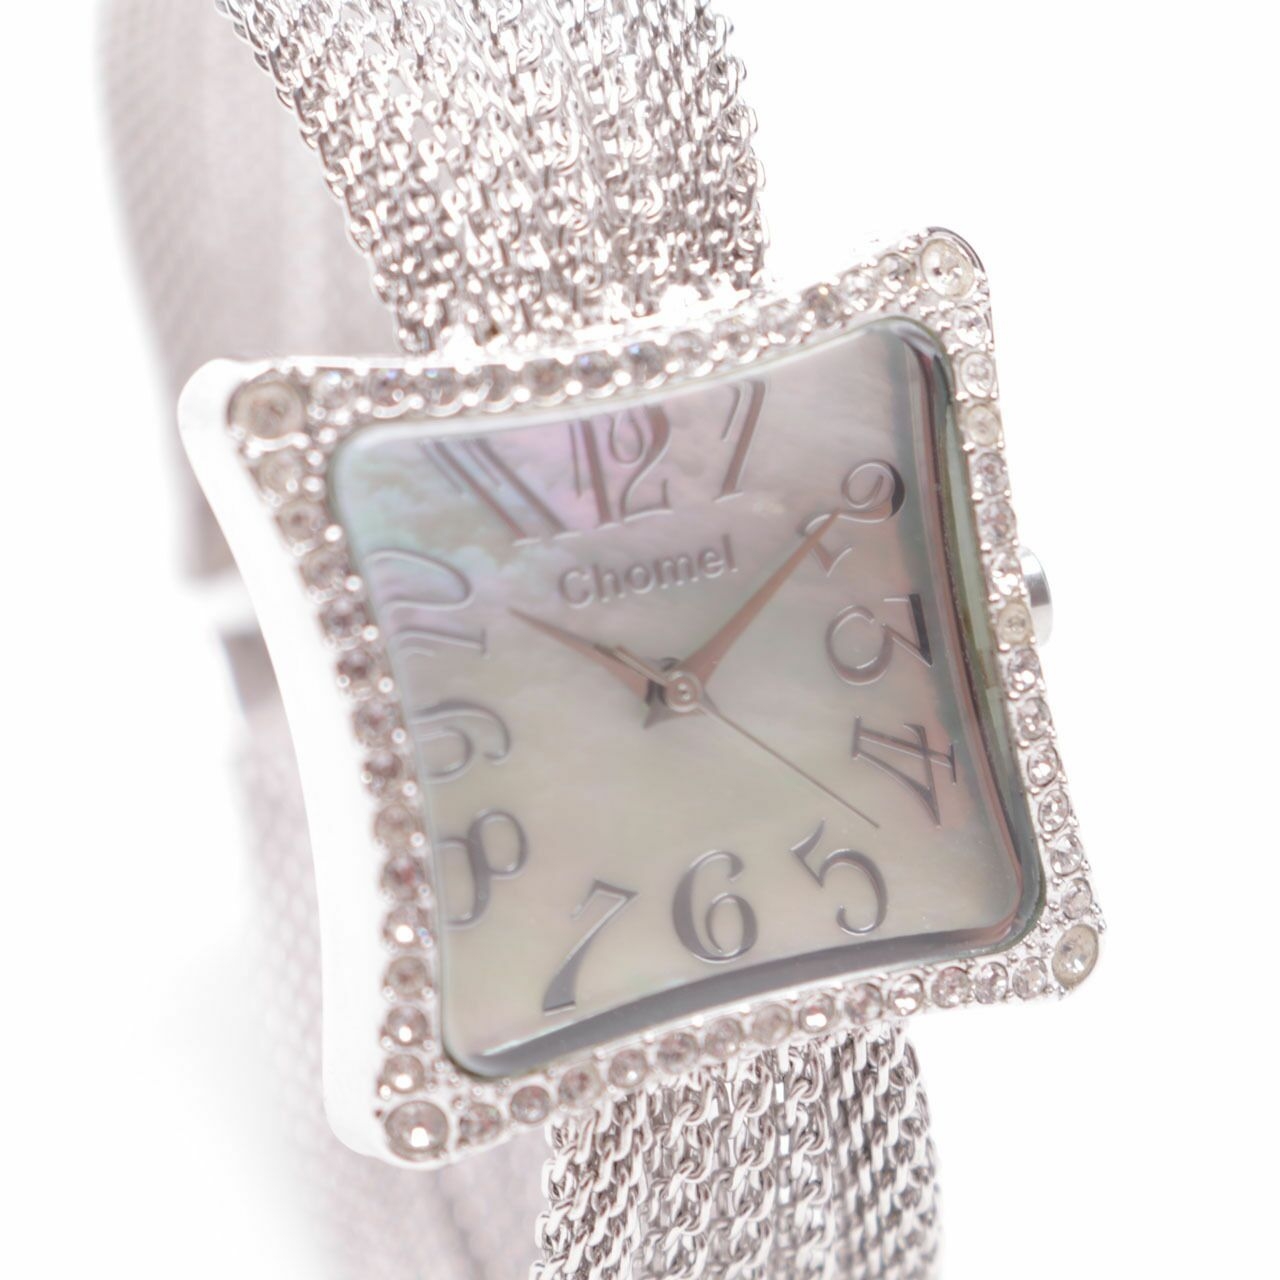 Chomel Silver Watch 